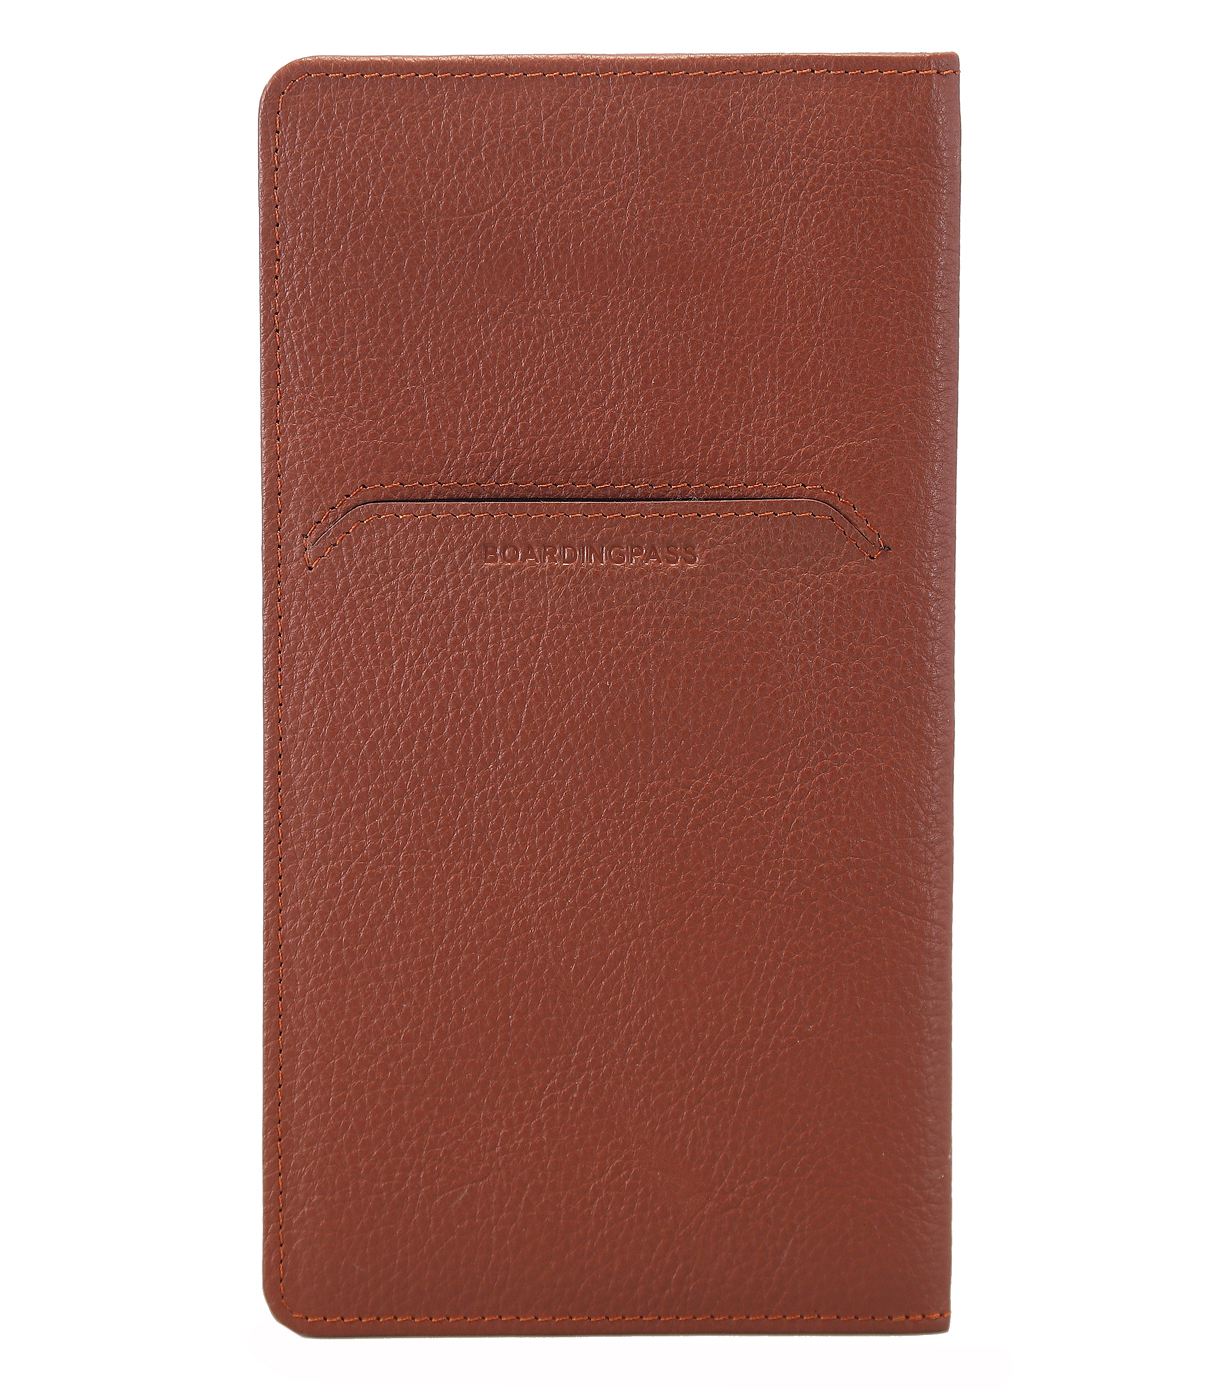 W85-Rafel-Travel document wallet in Genuine Leather - Tan